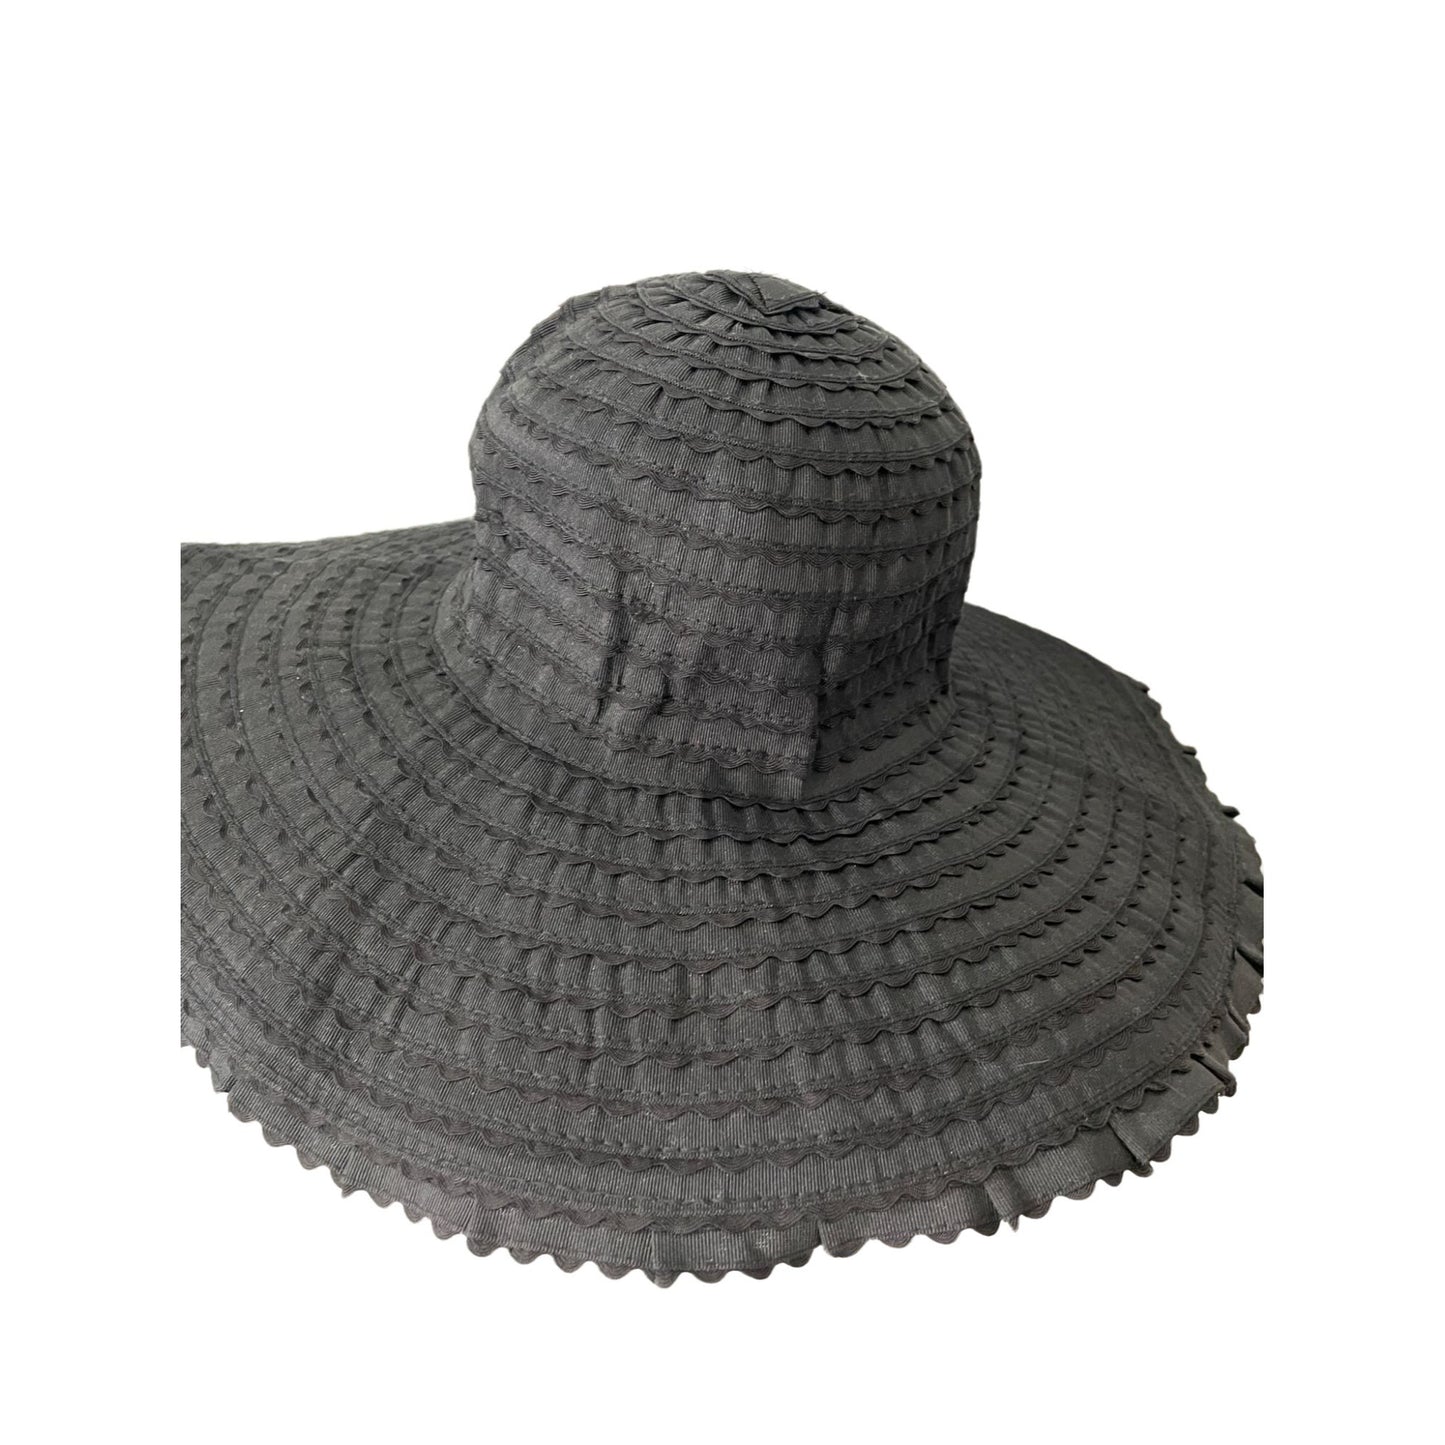 Black Floppy Beach Hat